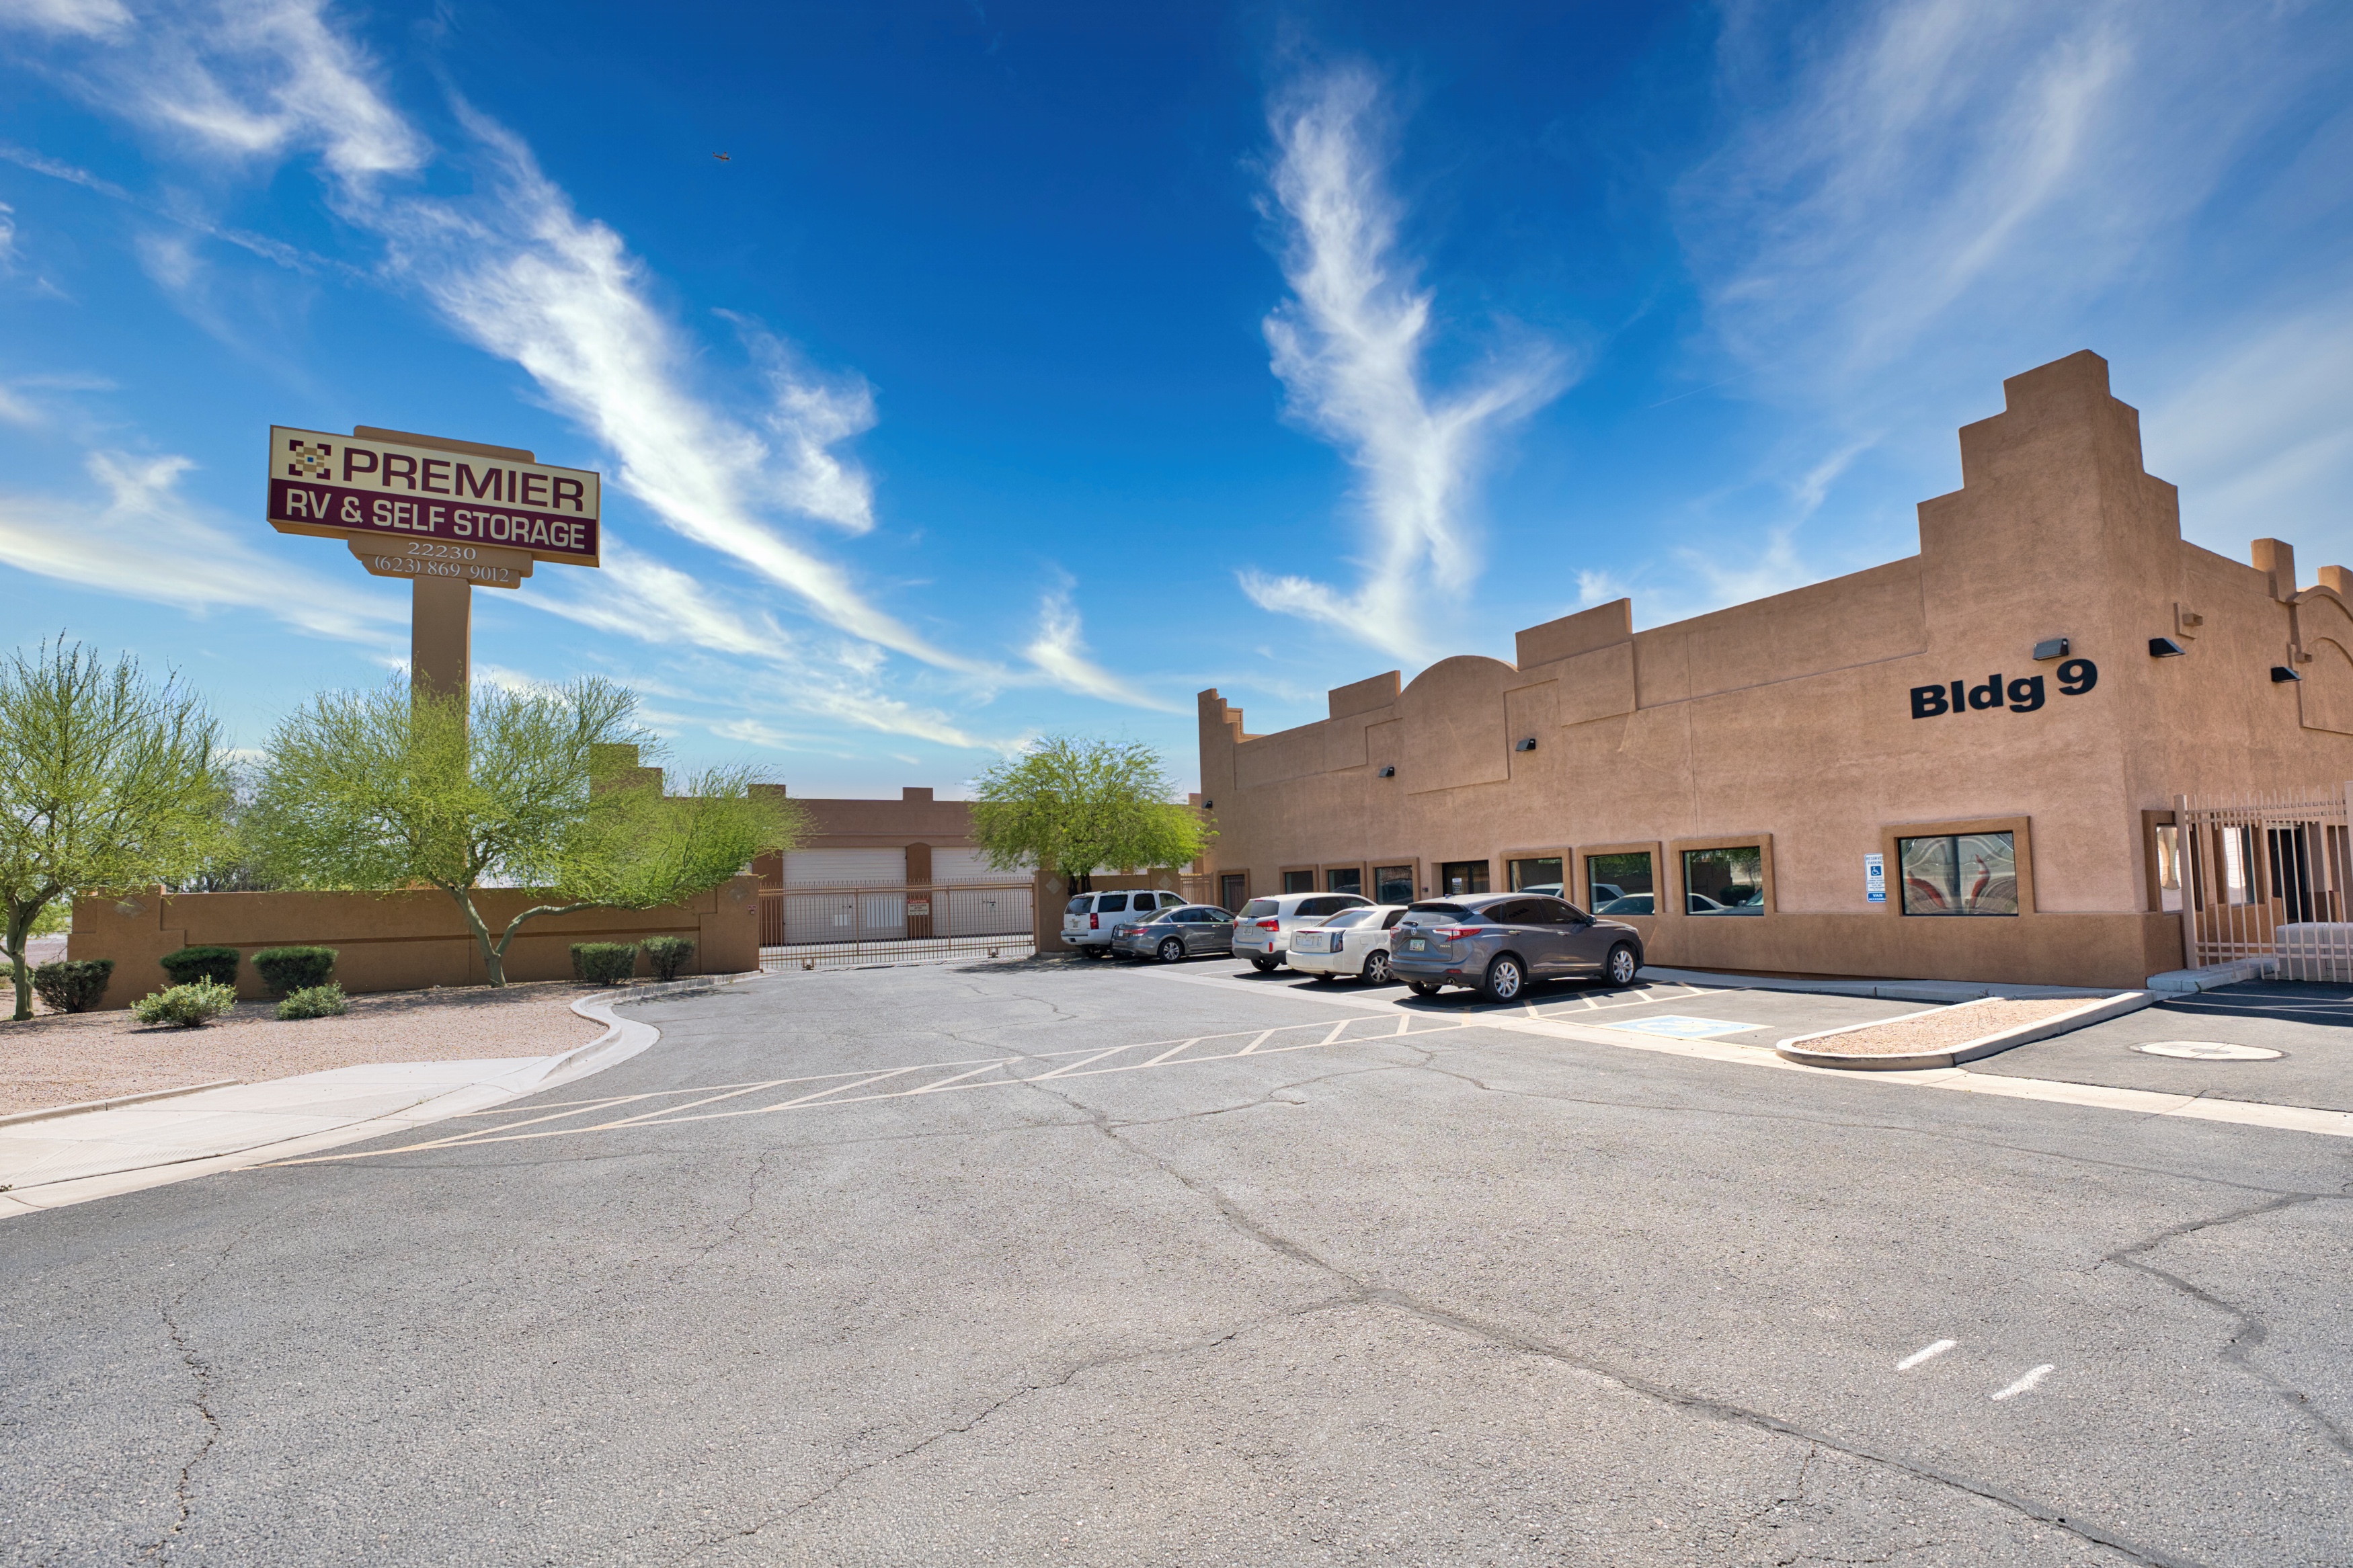 Premier RV & Self Storage, Phoenix, AZ